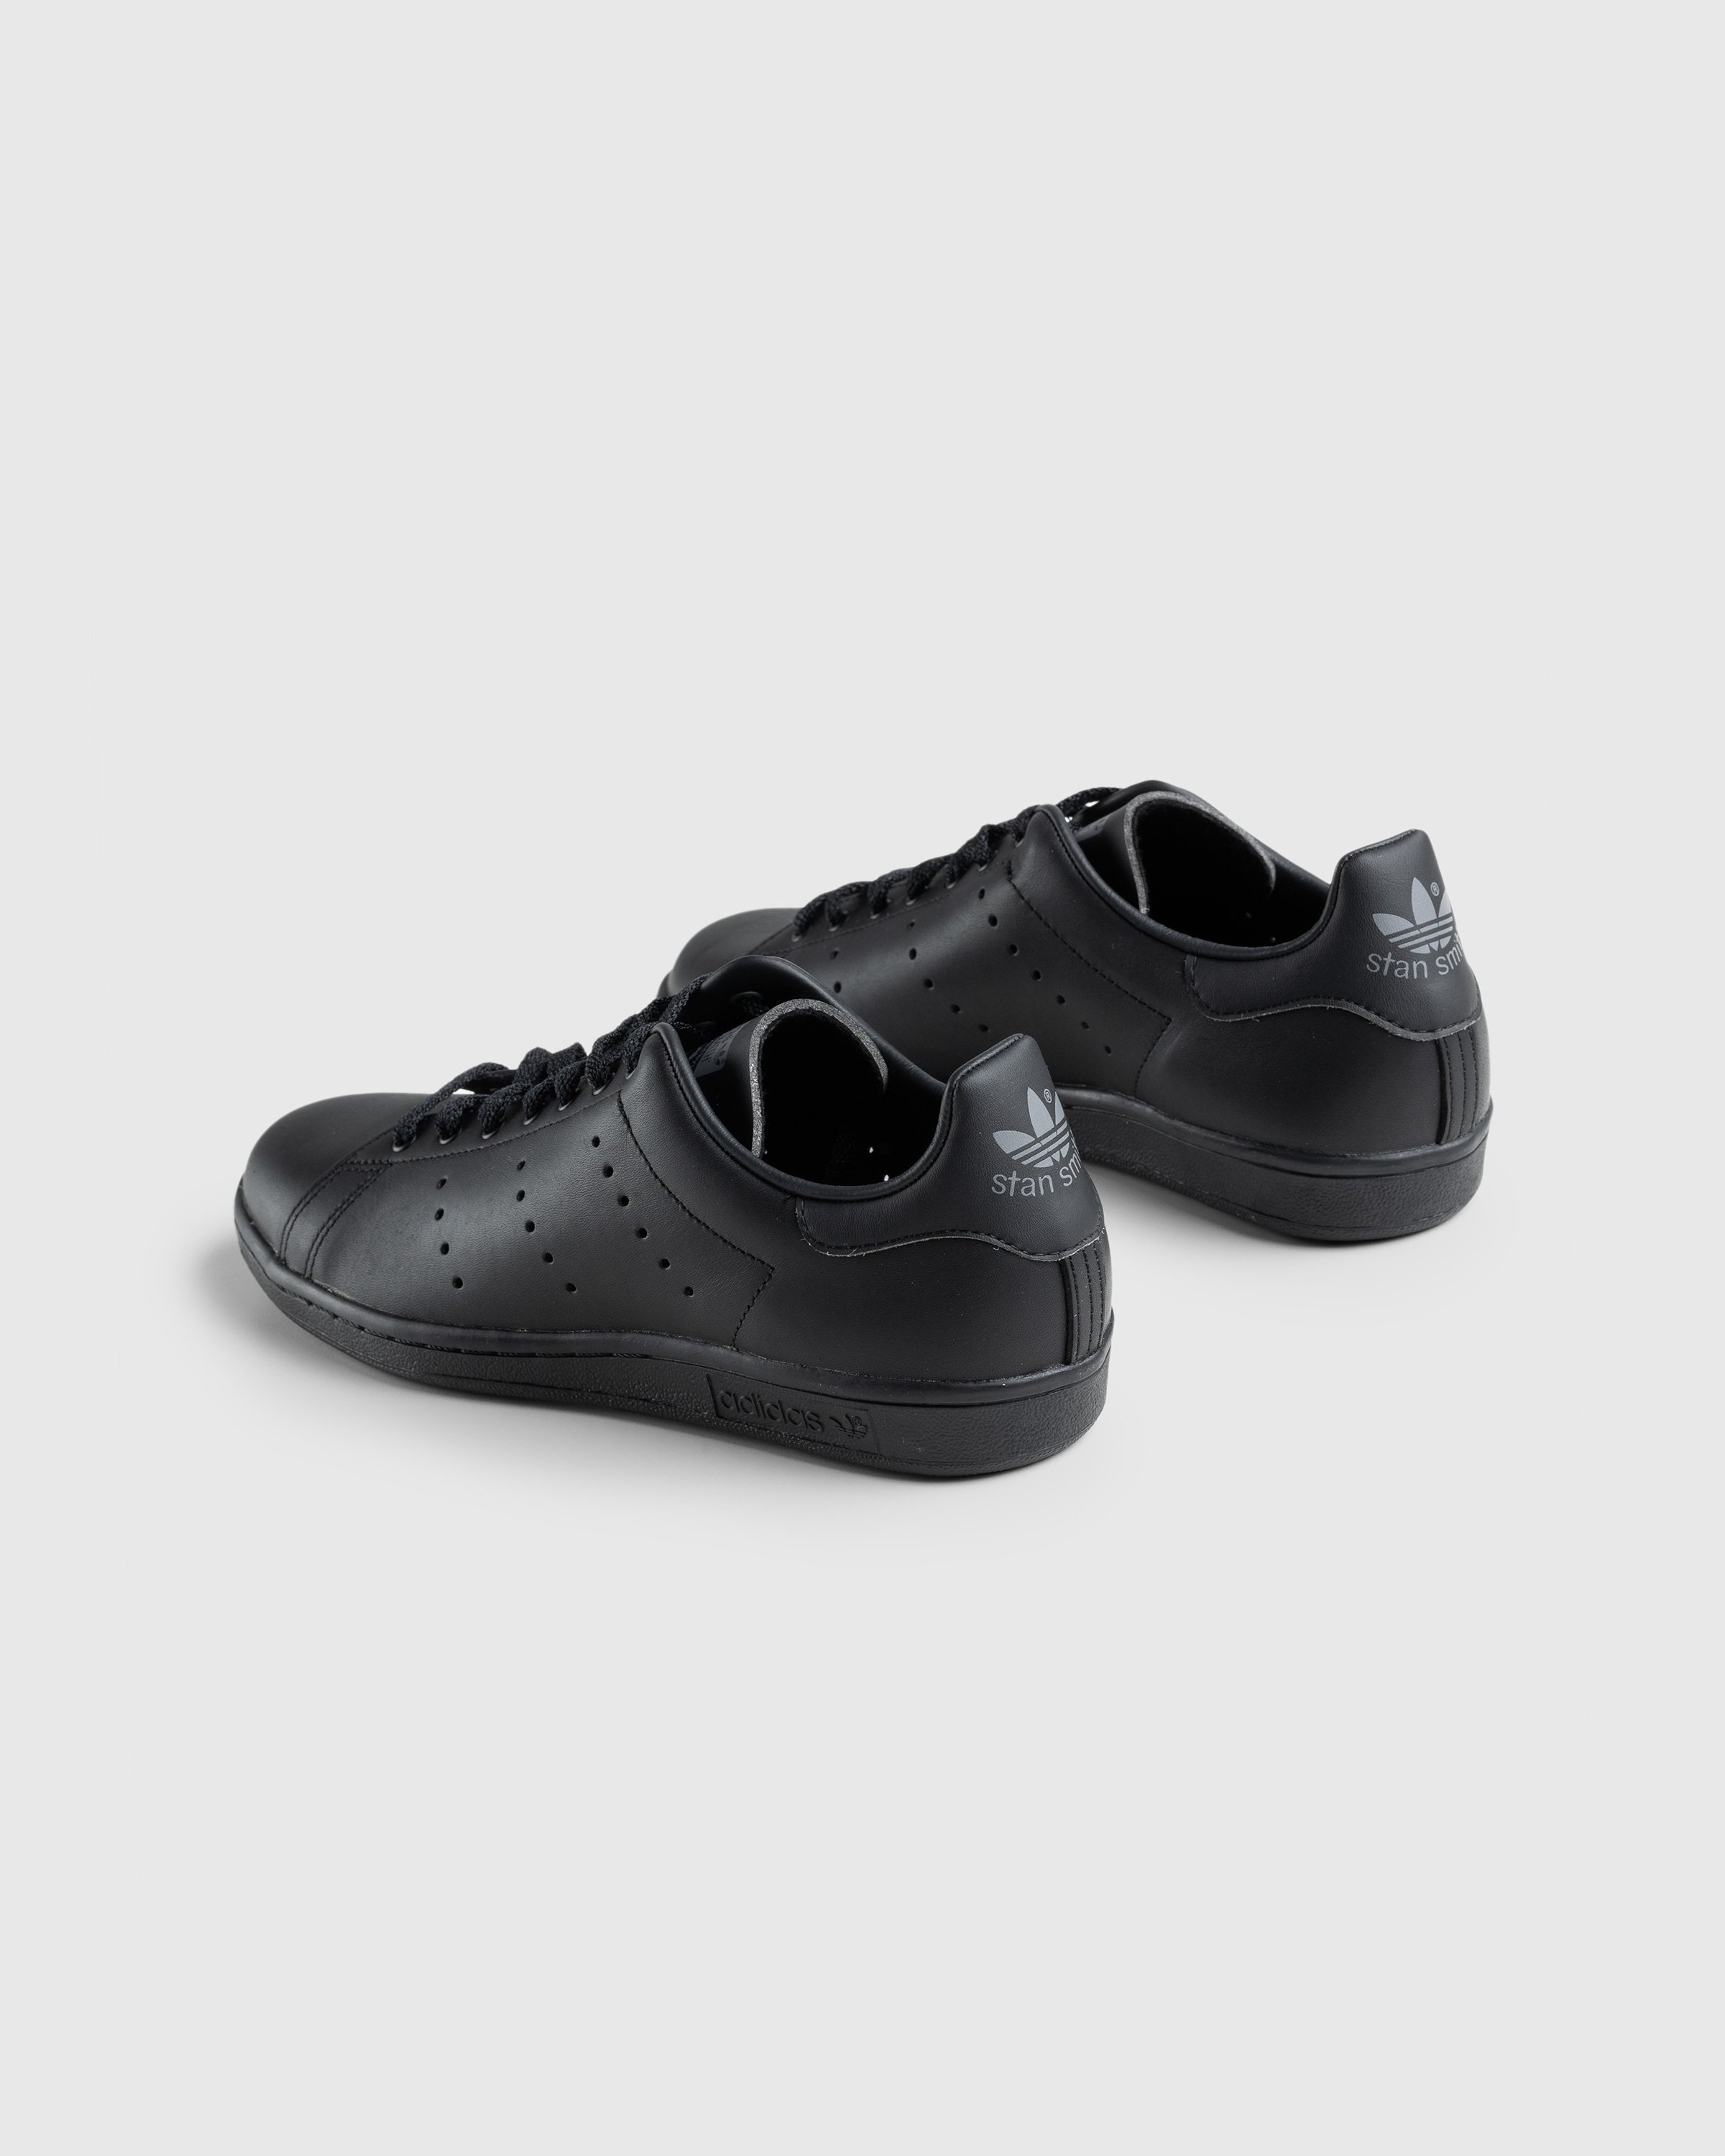 Adidas - Stan Smith 80s Black - Footwear - Black - Image 4